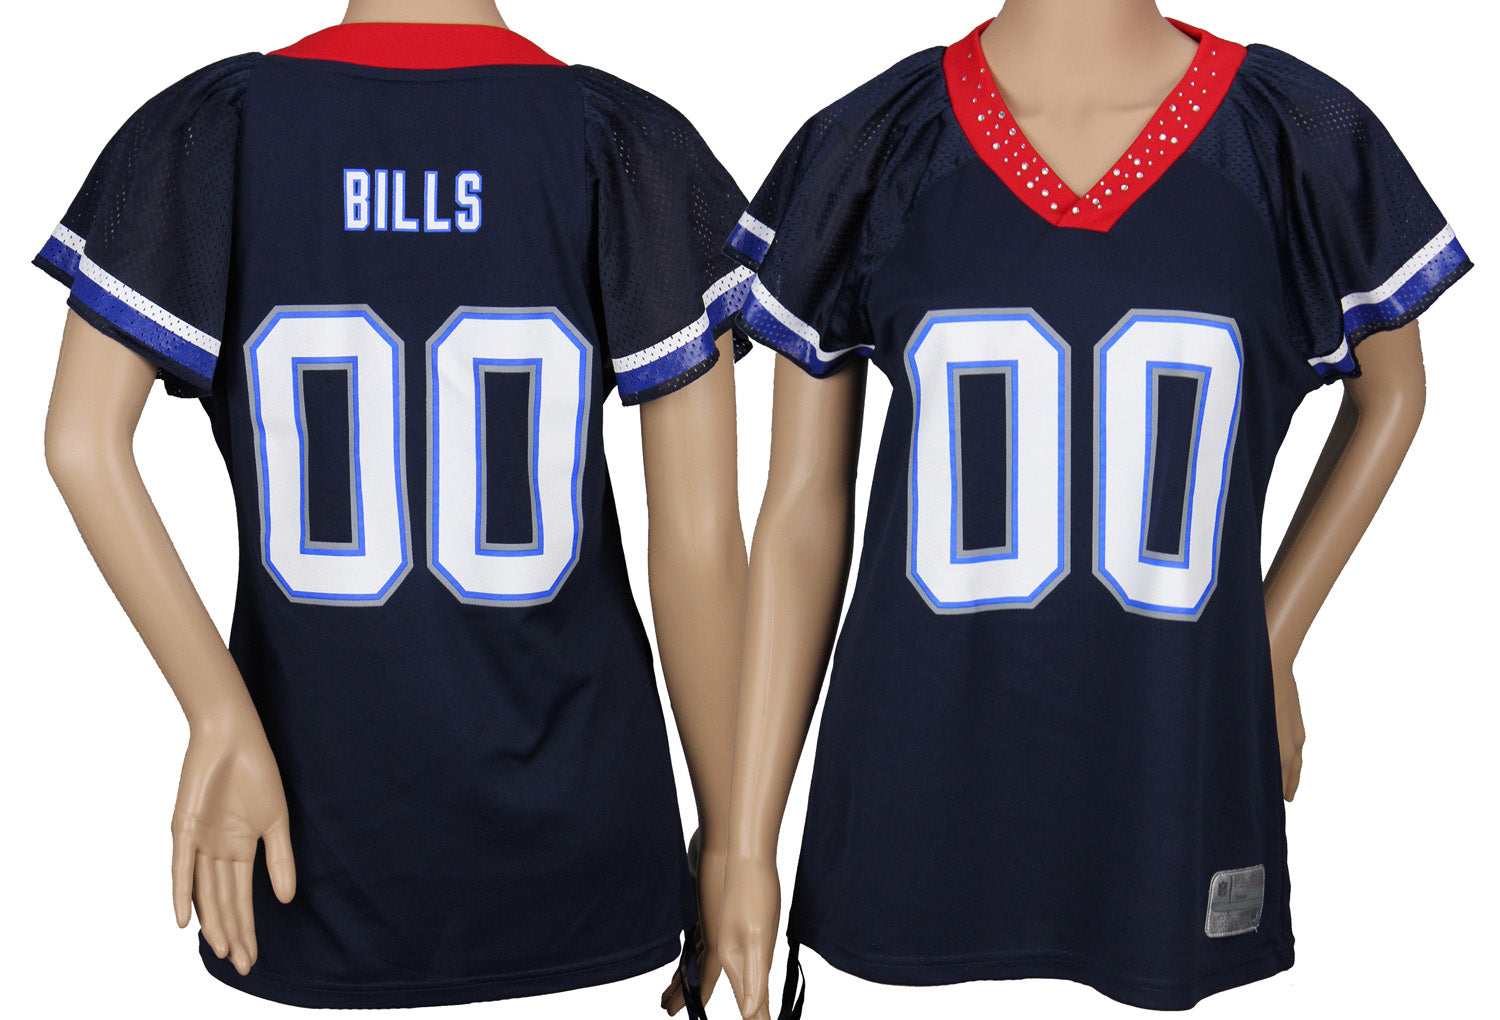 Buffalo Bills Jerseys in Buffalo Bills Team Shop 